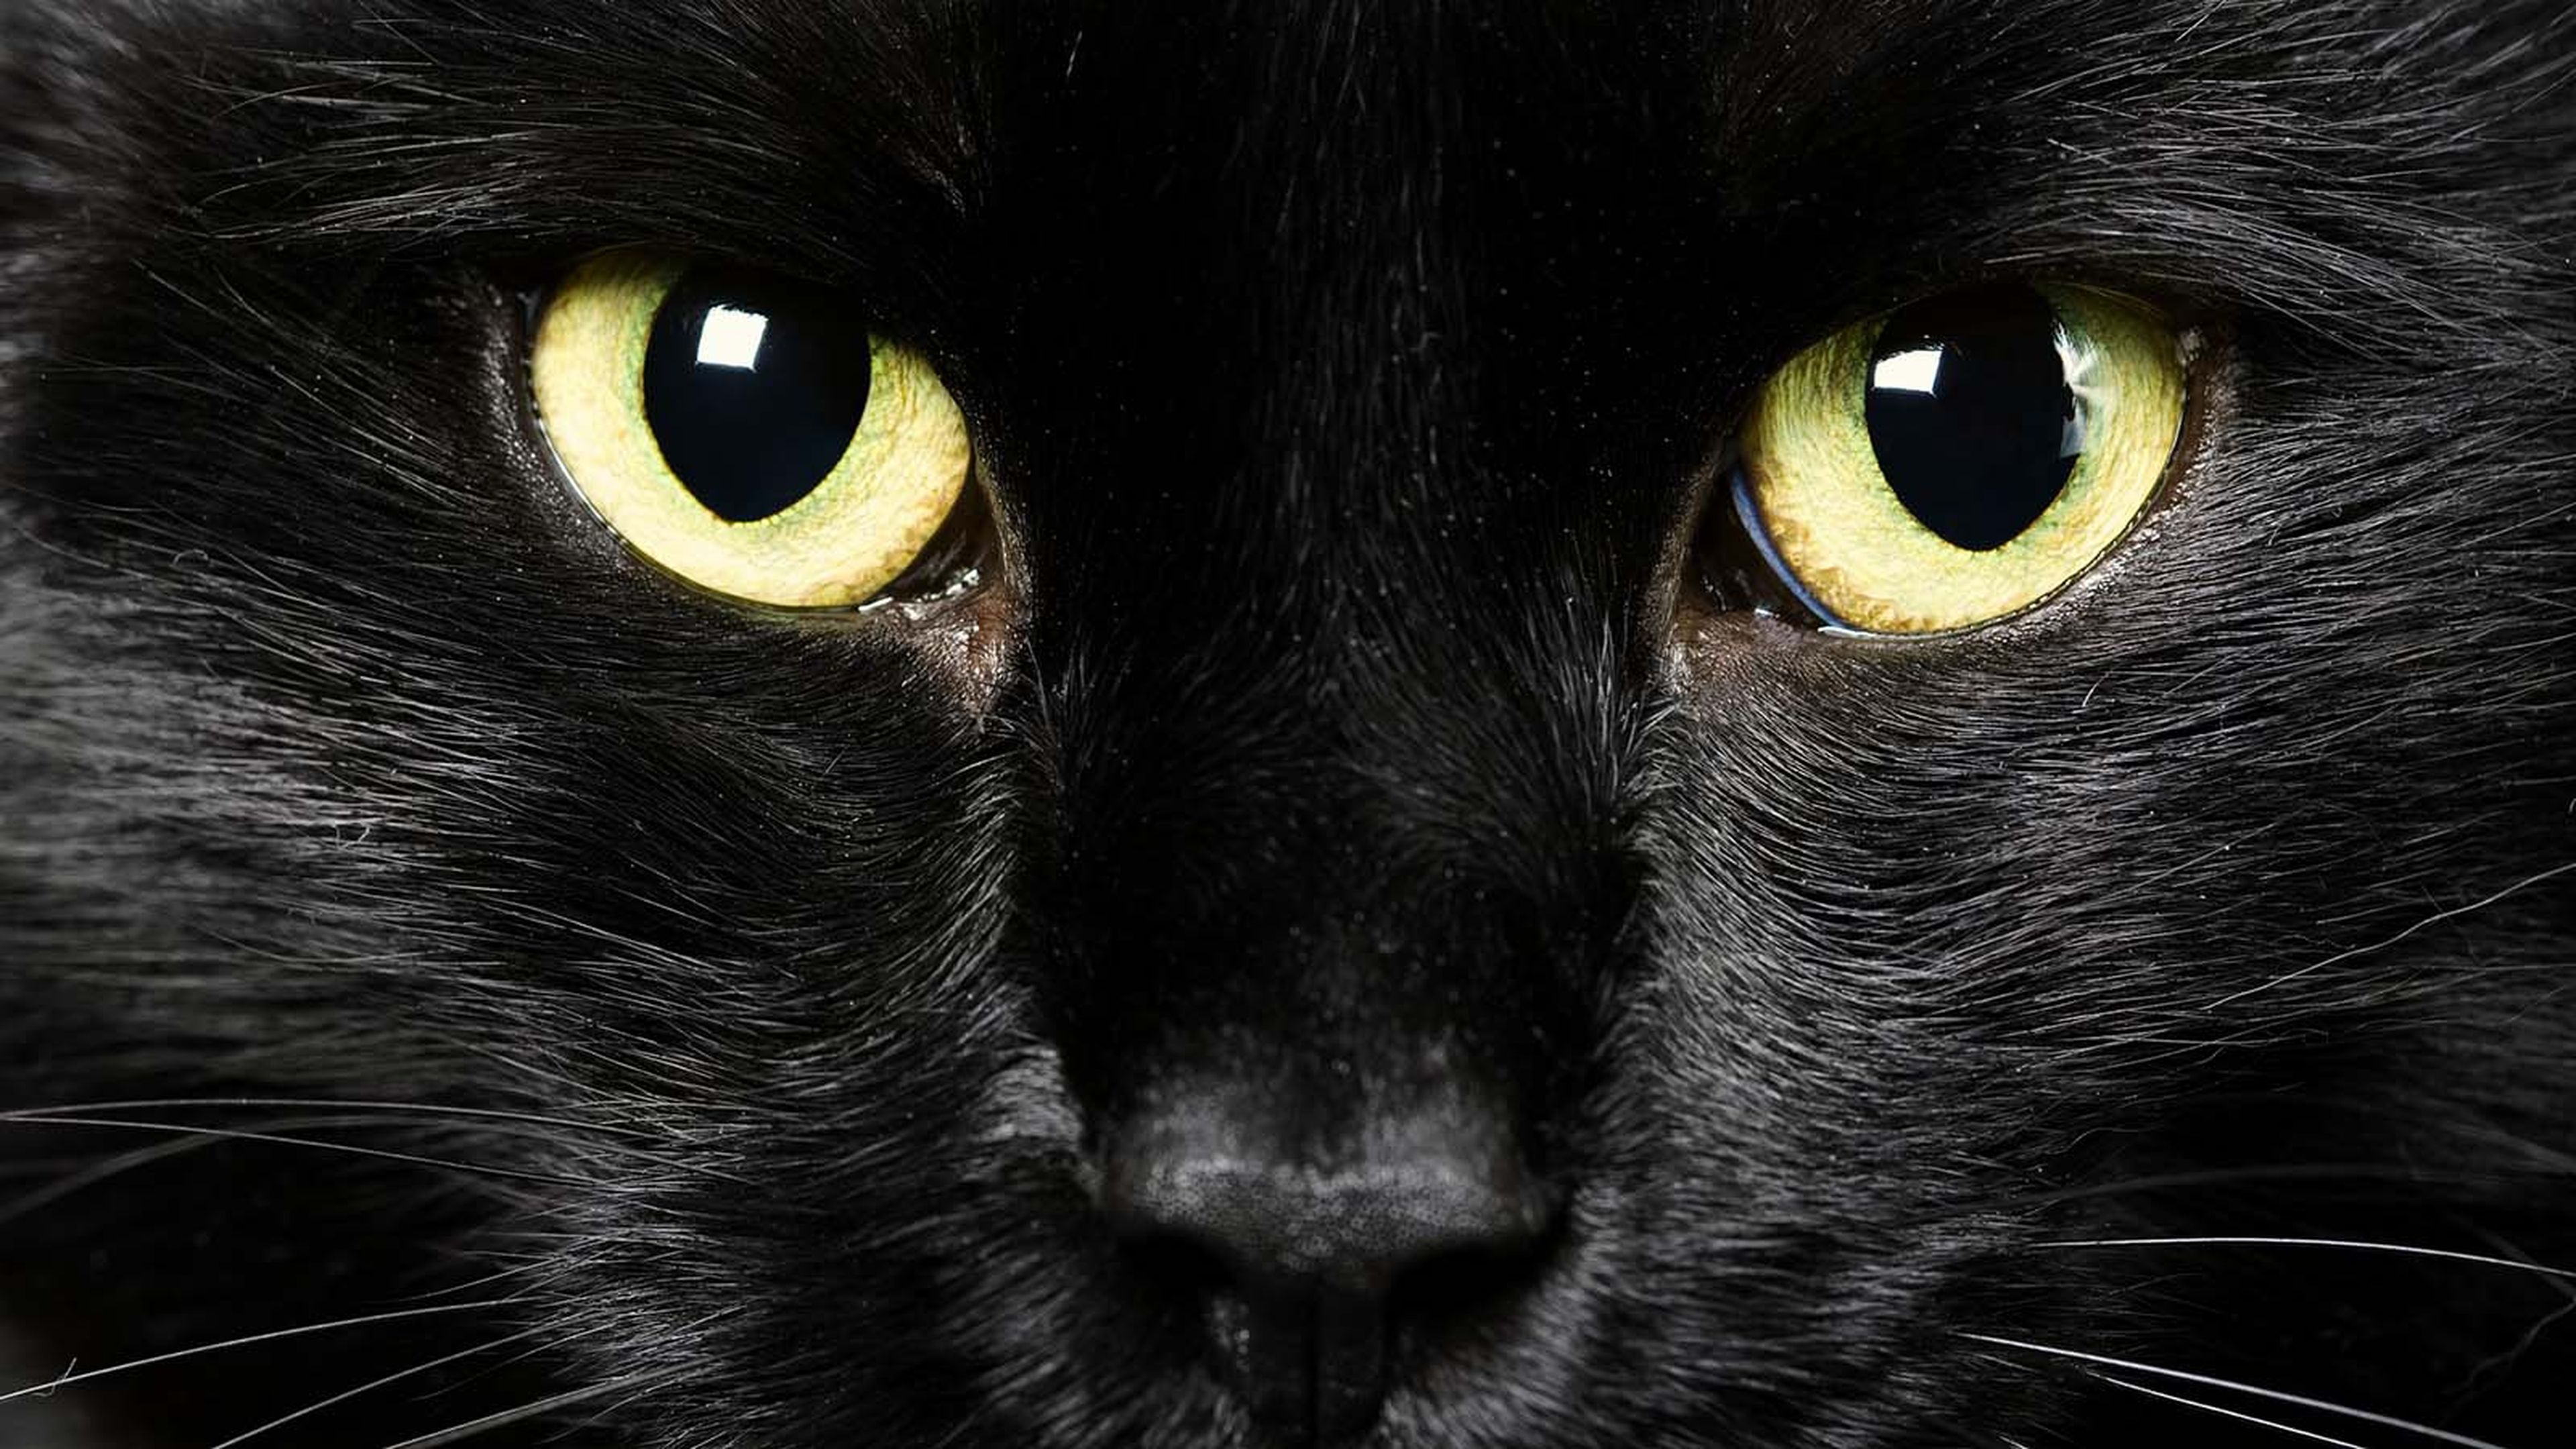 A close-up of cat eyes, black cat